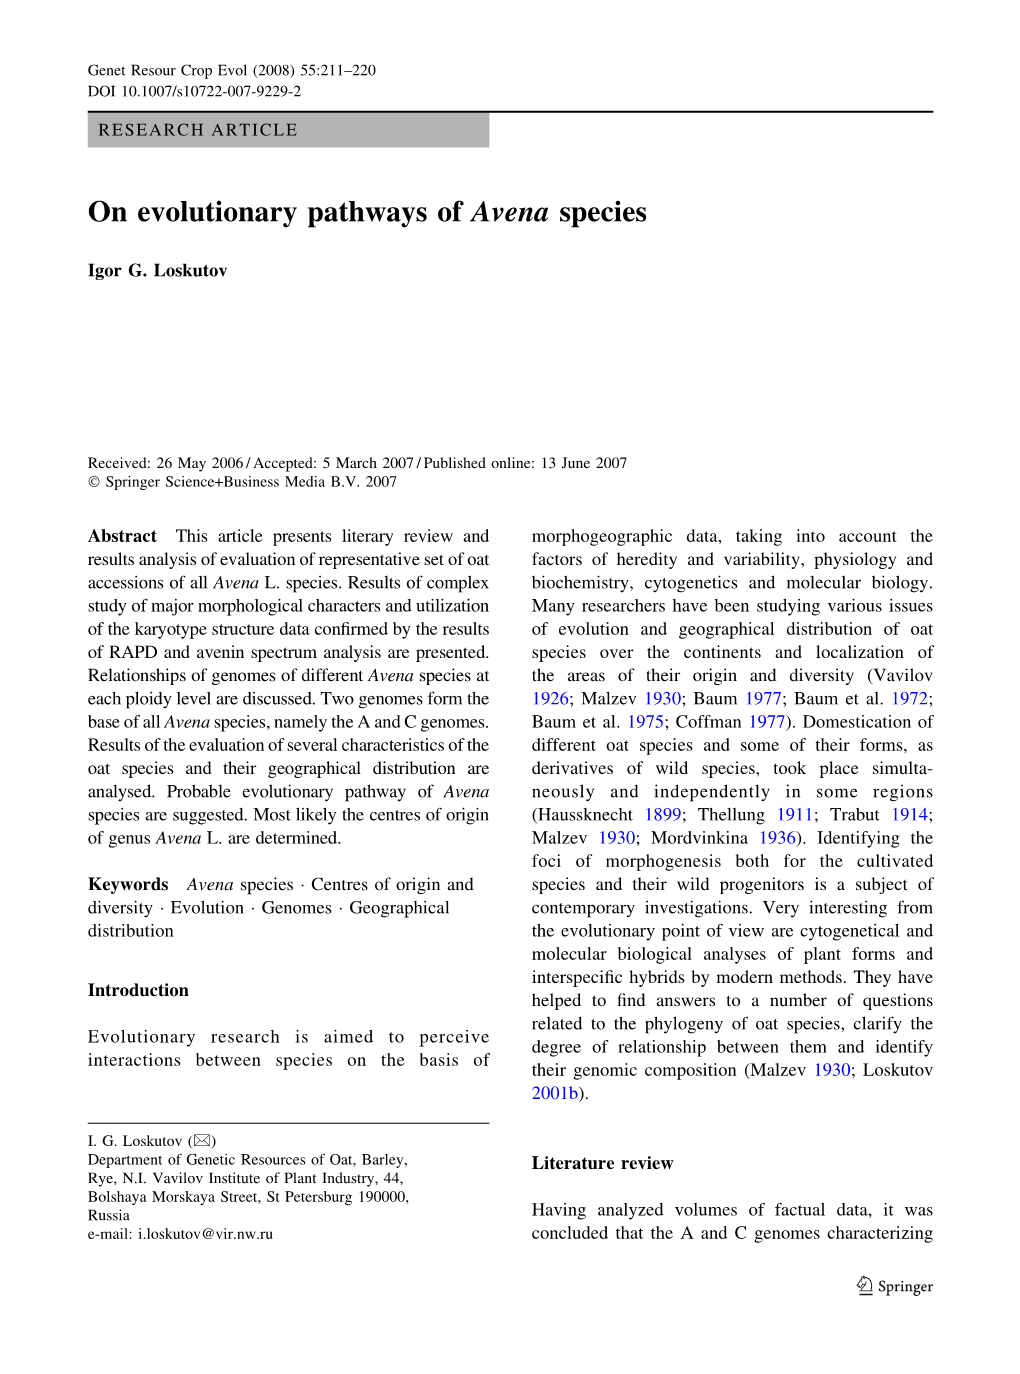 On Evolutionary Pathways of Avena Species